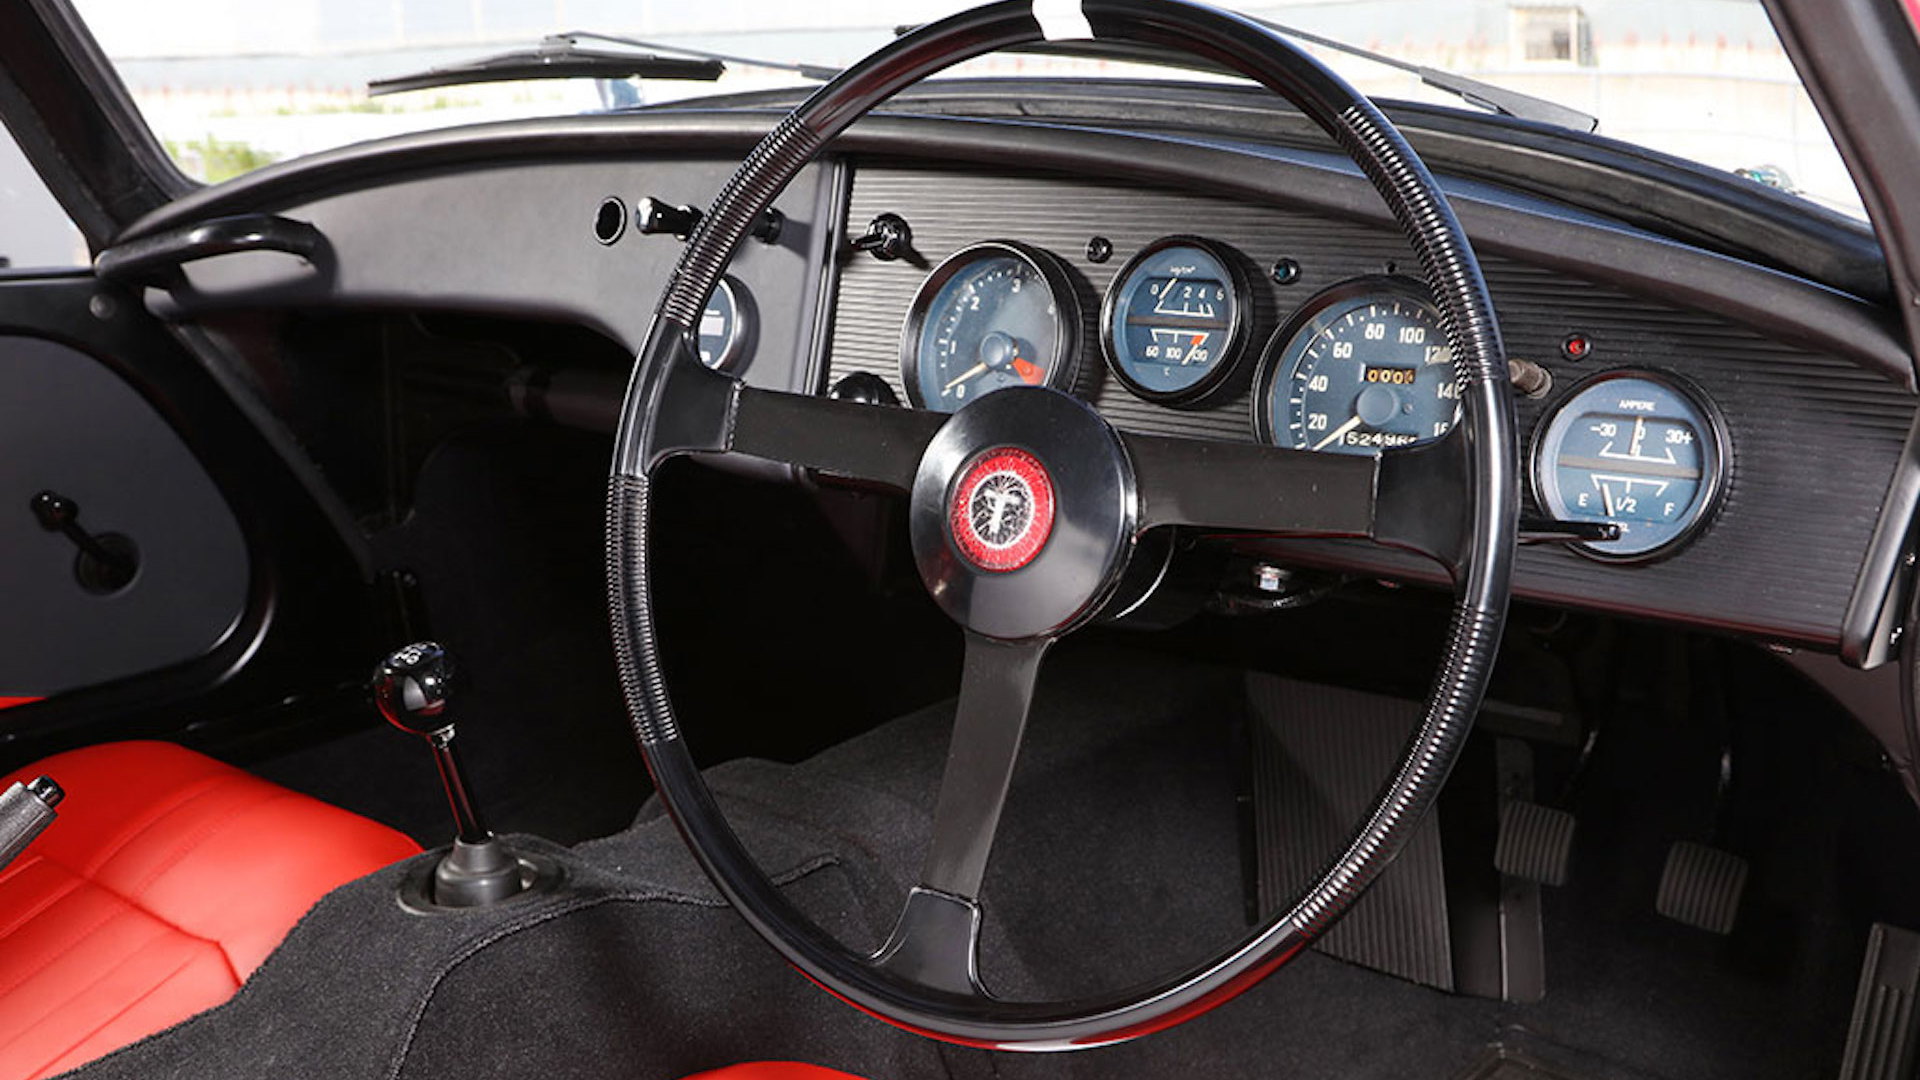 1966 Toyota Sports 800 restored by Gazoo Racing